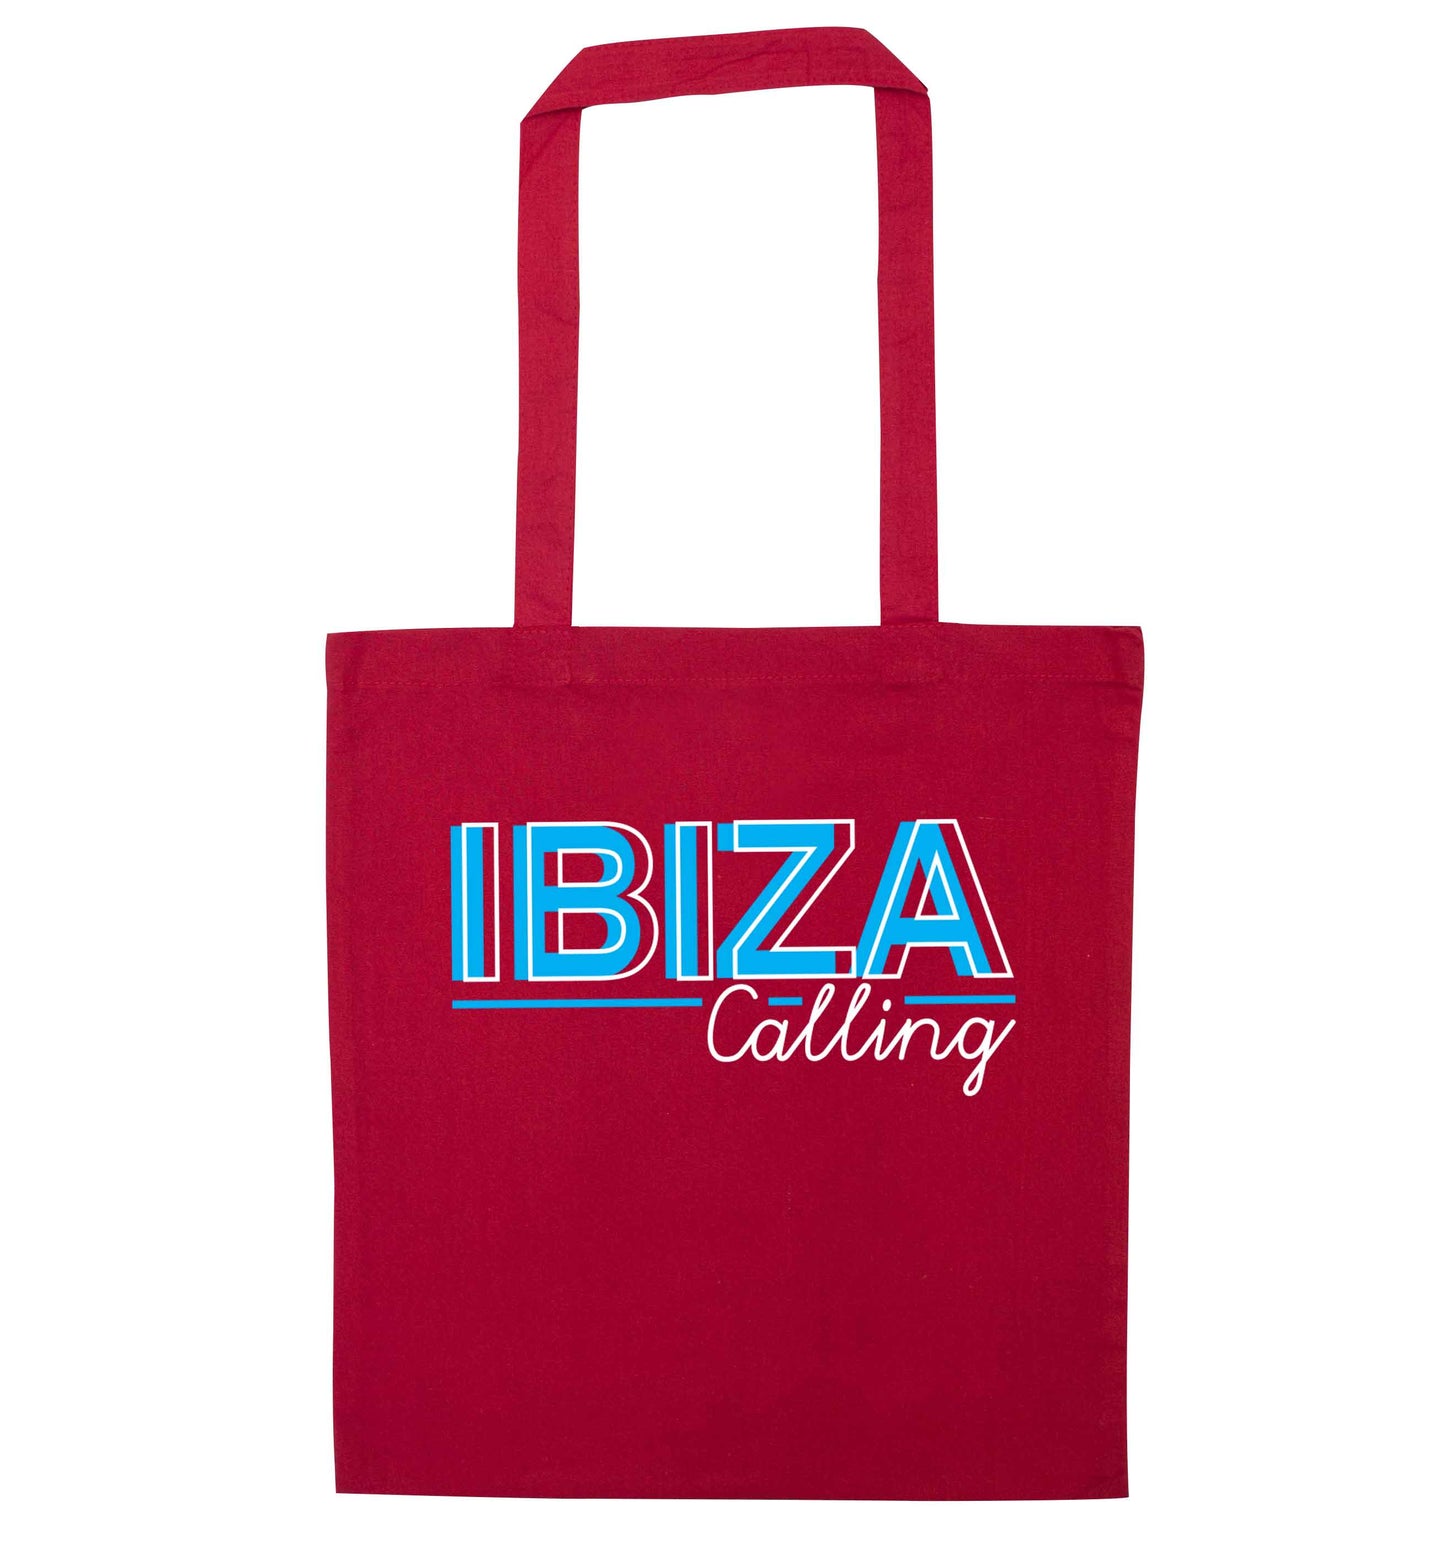 Ibiza calling red tote bag